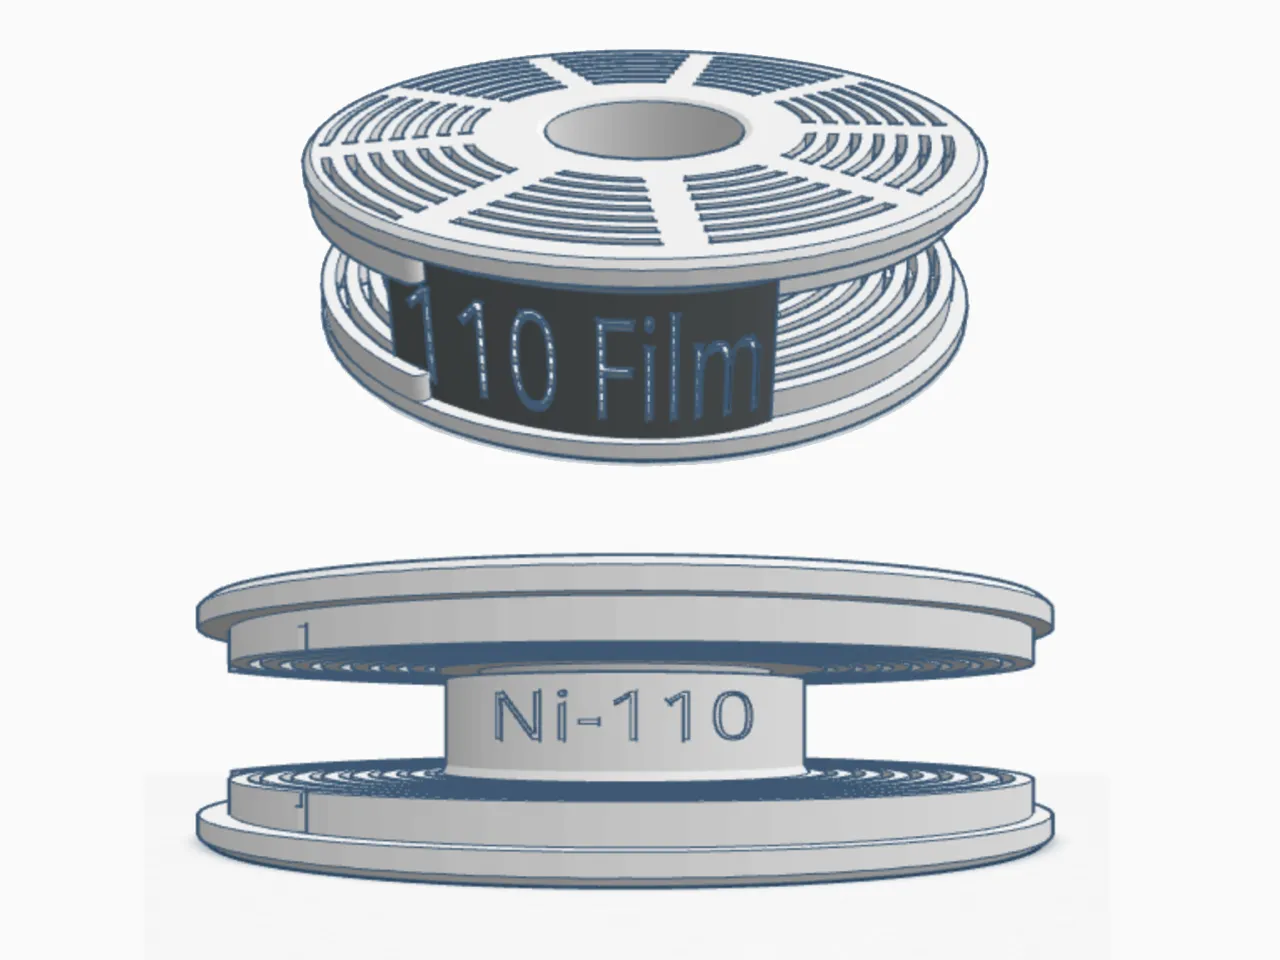 110/16mm Film Development Reel - v1 (Nikor/Stainless-fit) by